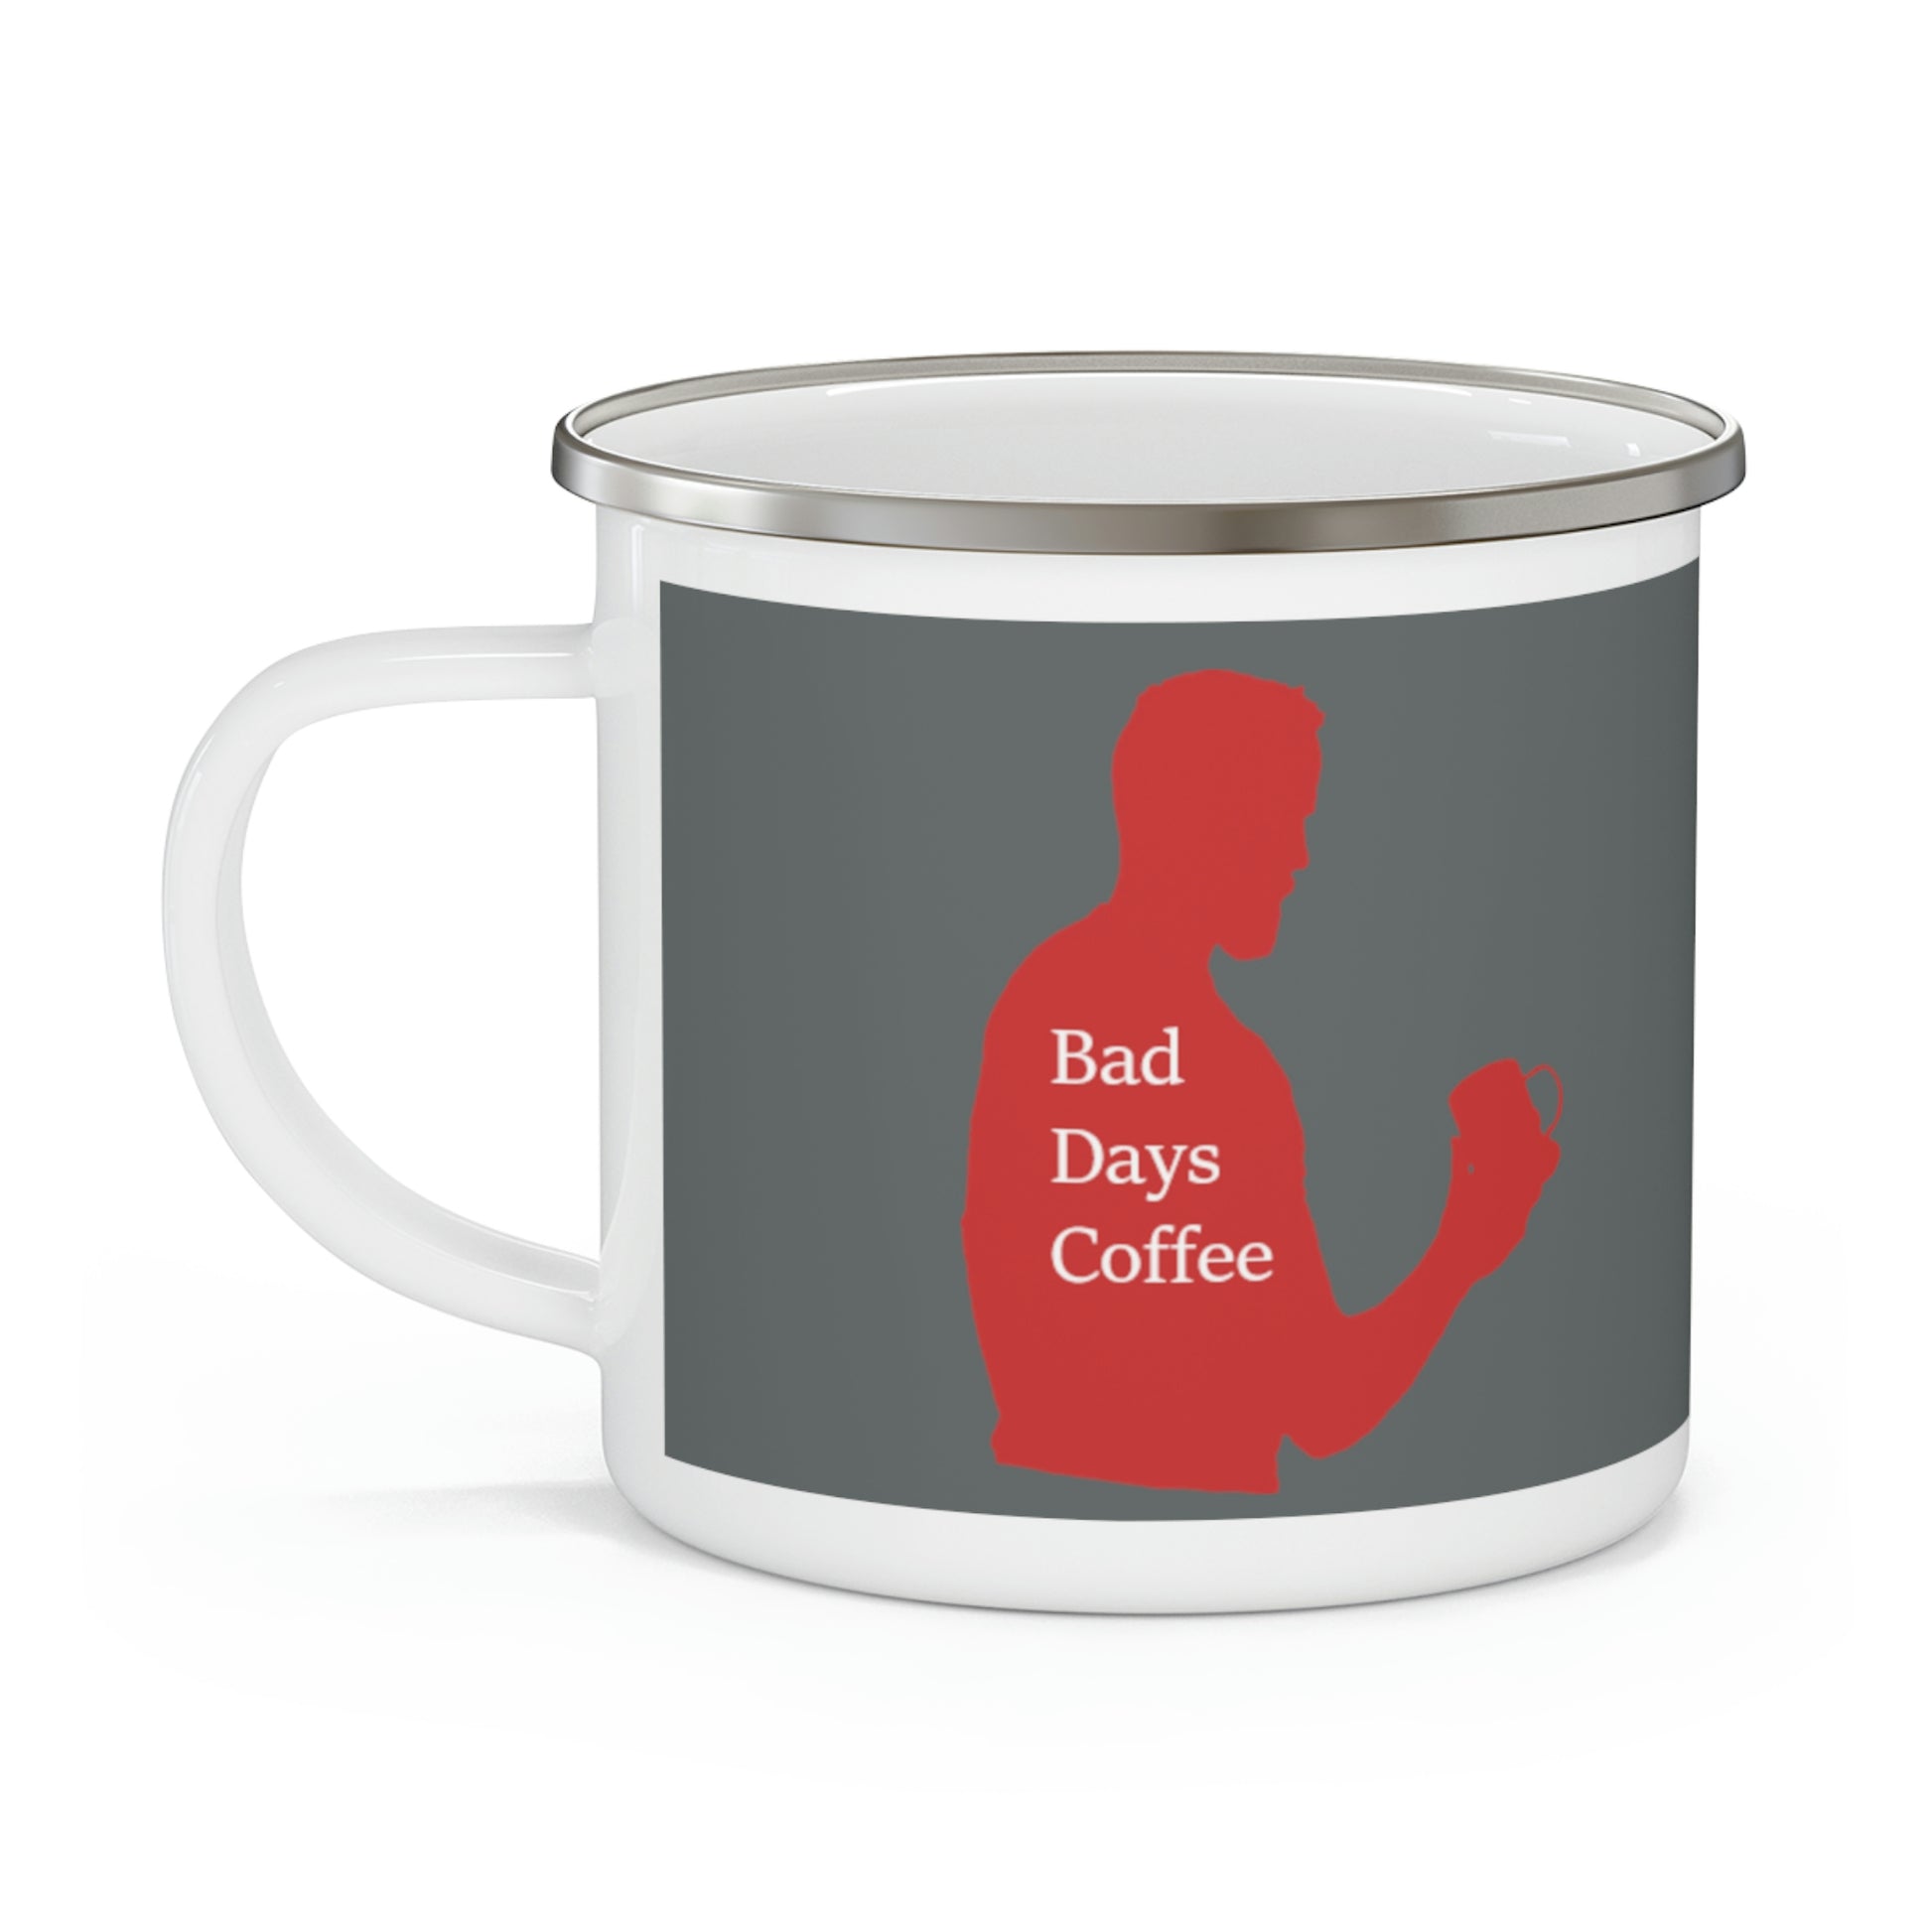 Bad Days Coffee Insulated Tumbler, 11oz